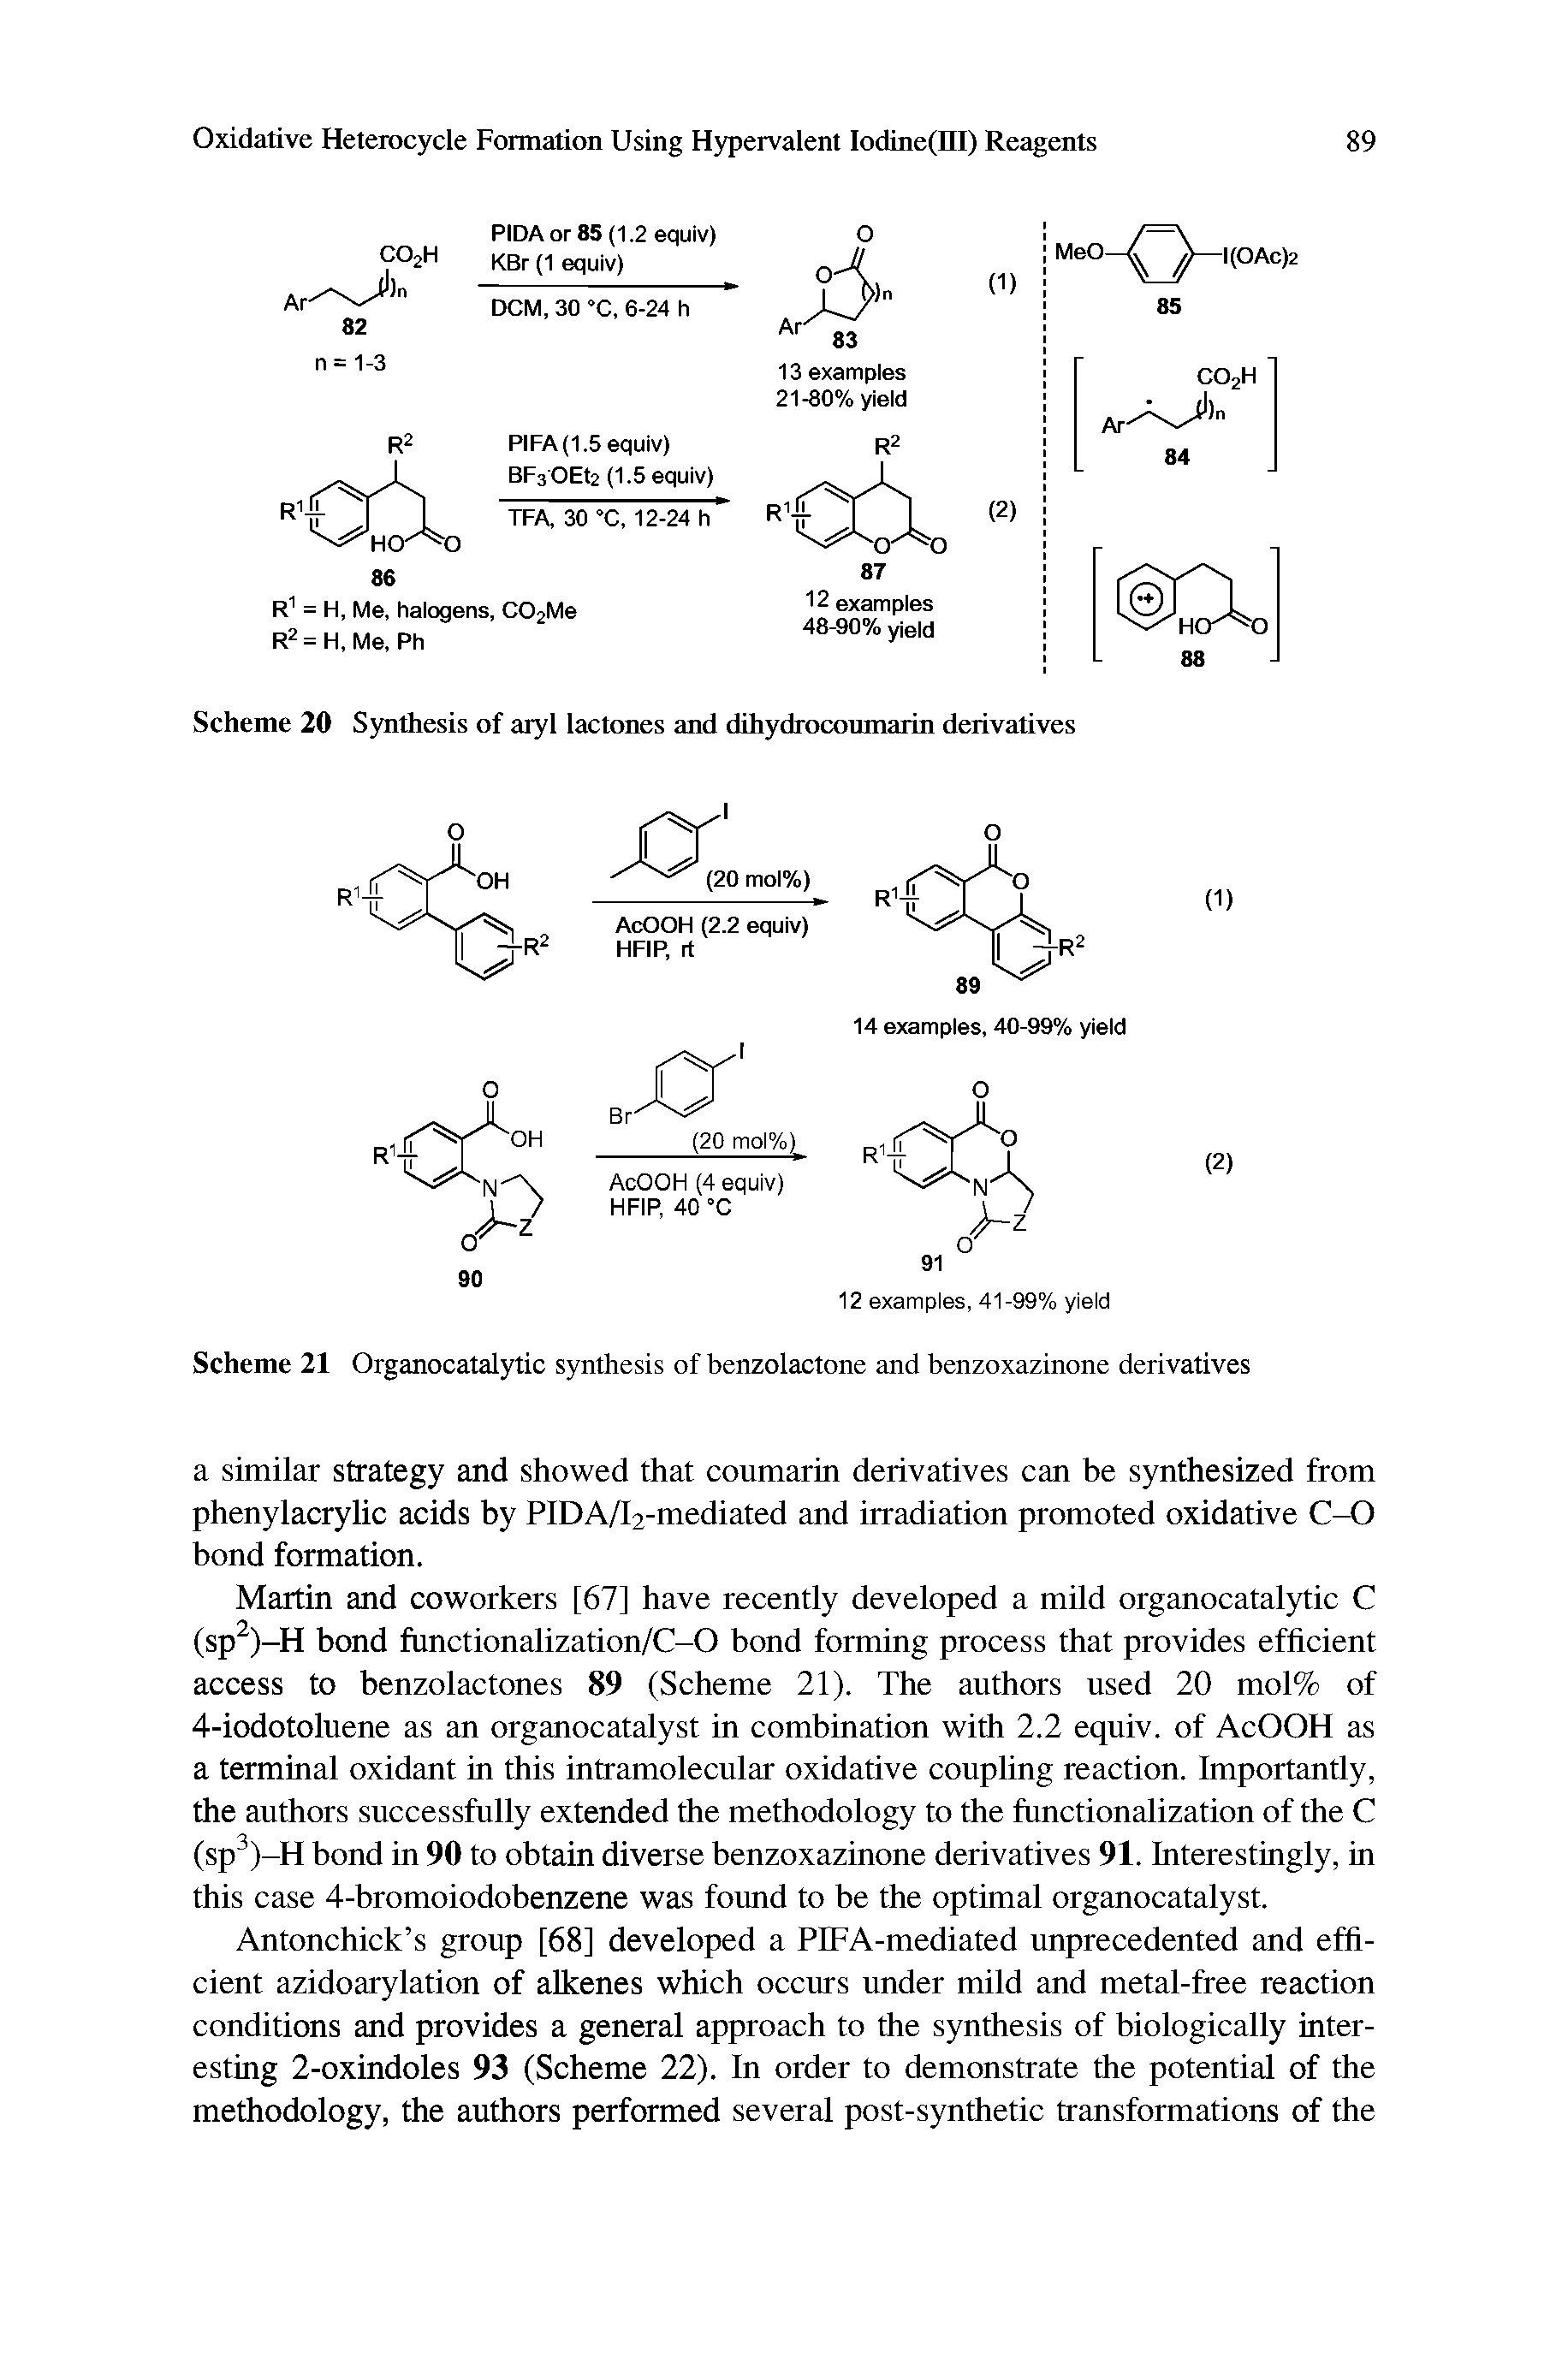 Scheme 20 Synthesis of aryl lactones and dibydrocoumarin derivatives...